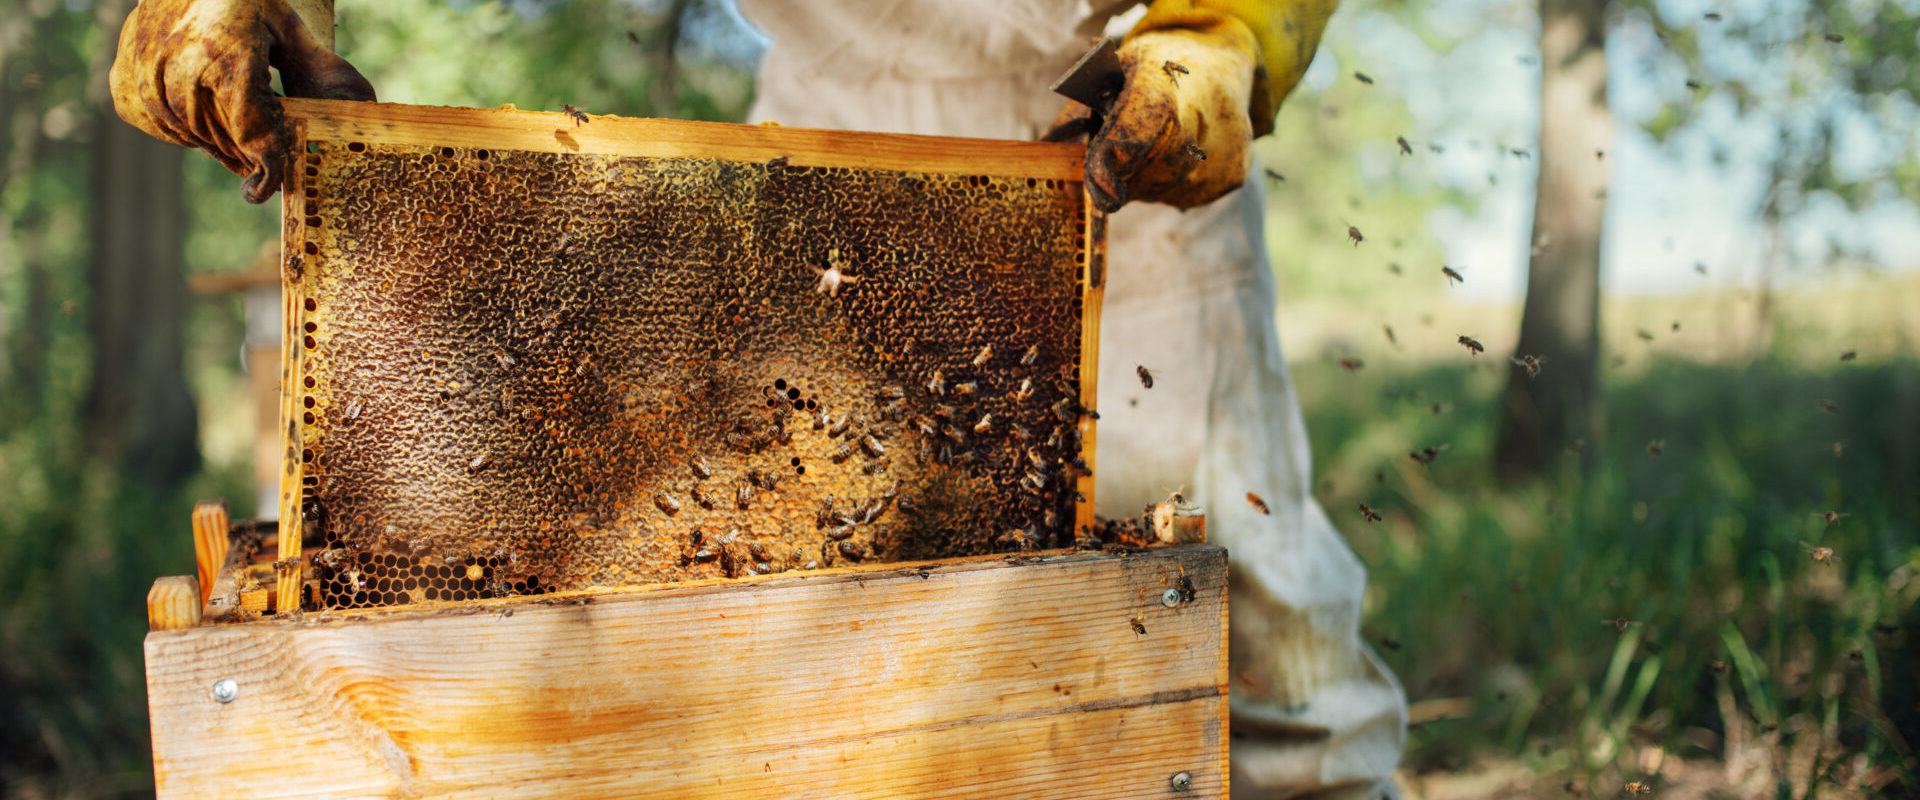 Preparing for Summer Honey Flow: A Beekeeper's Guide